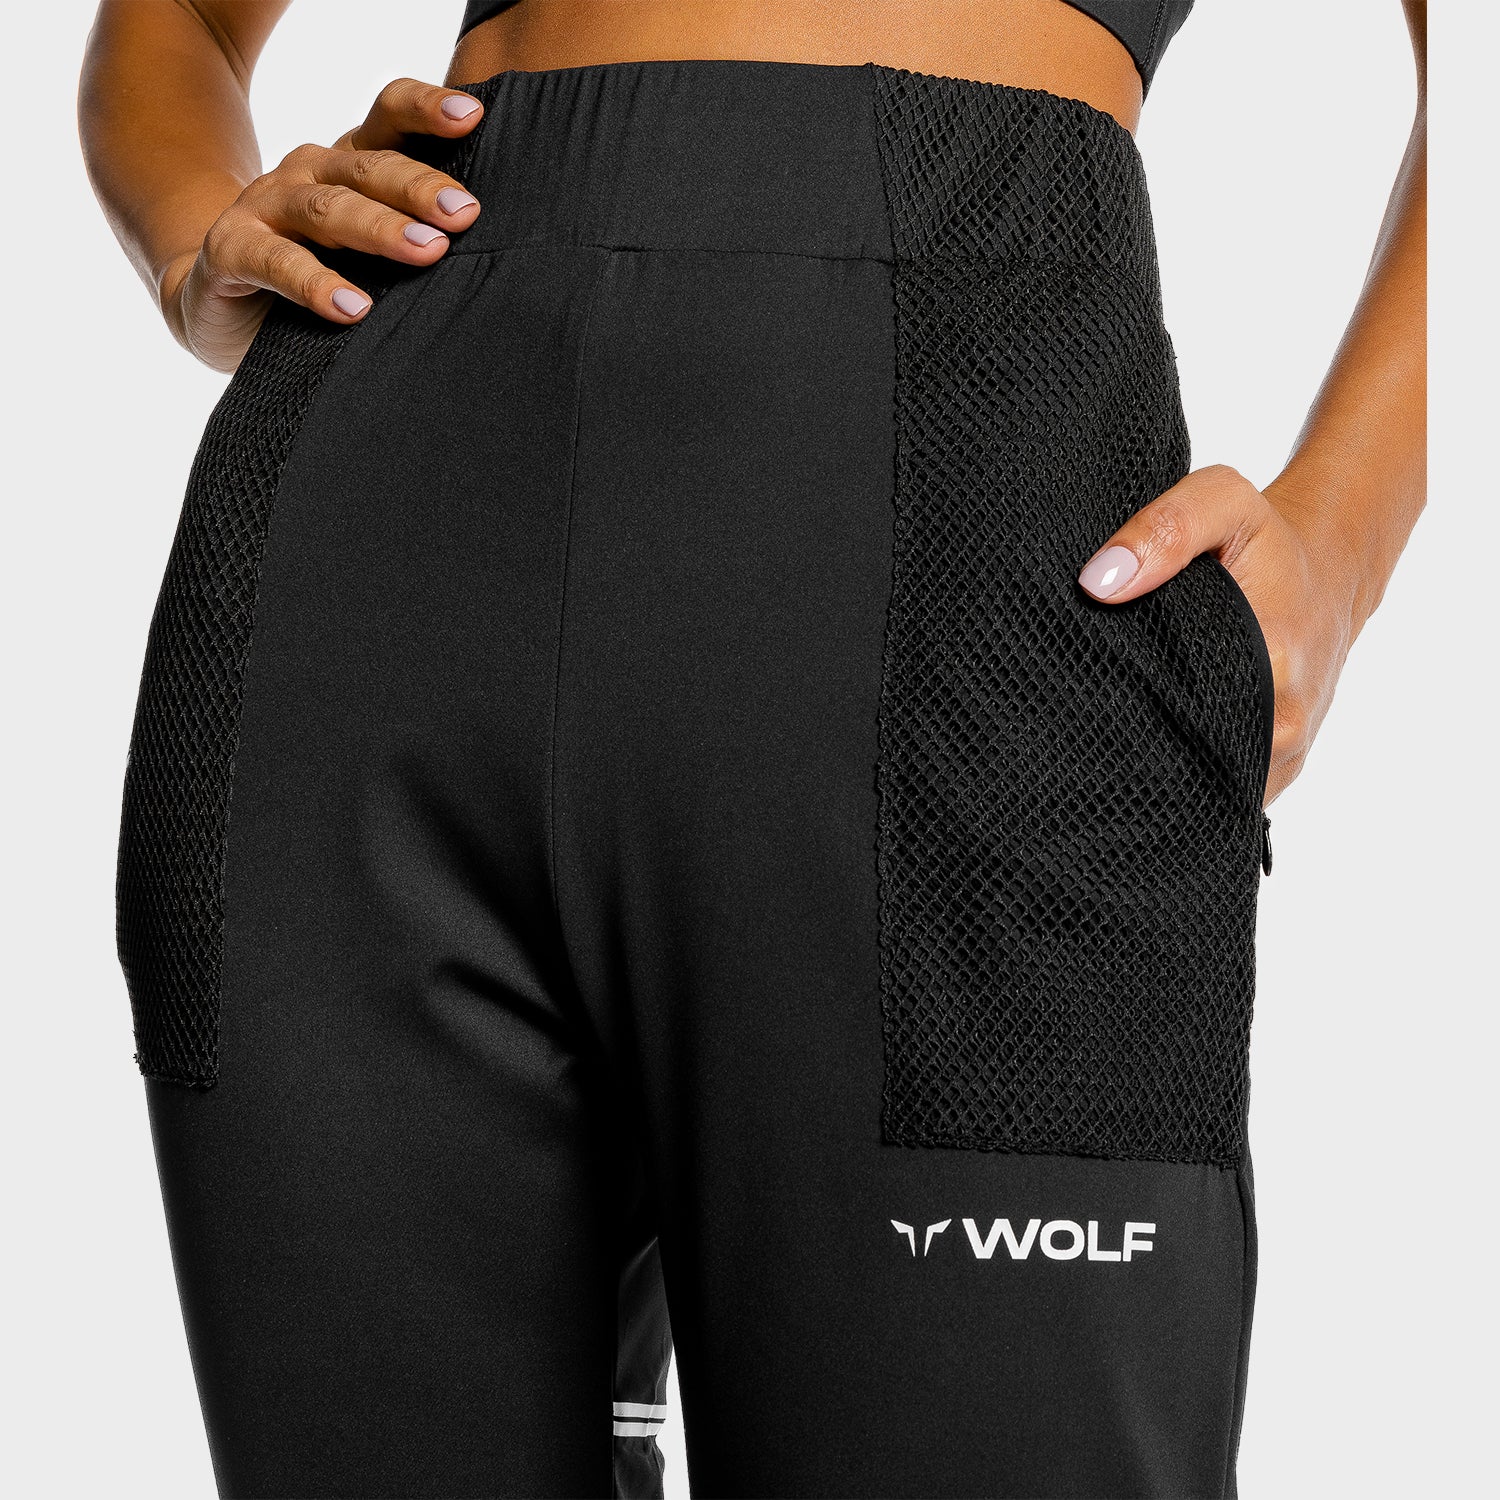 squatwolf-gym-pants-for-women-noor-track-pants-black-workout-clothes